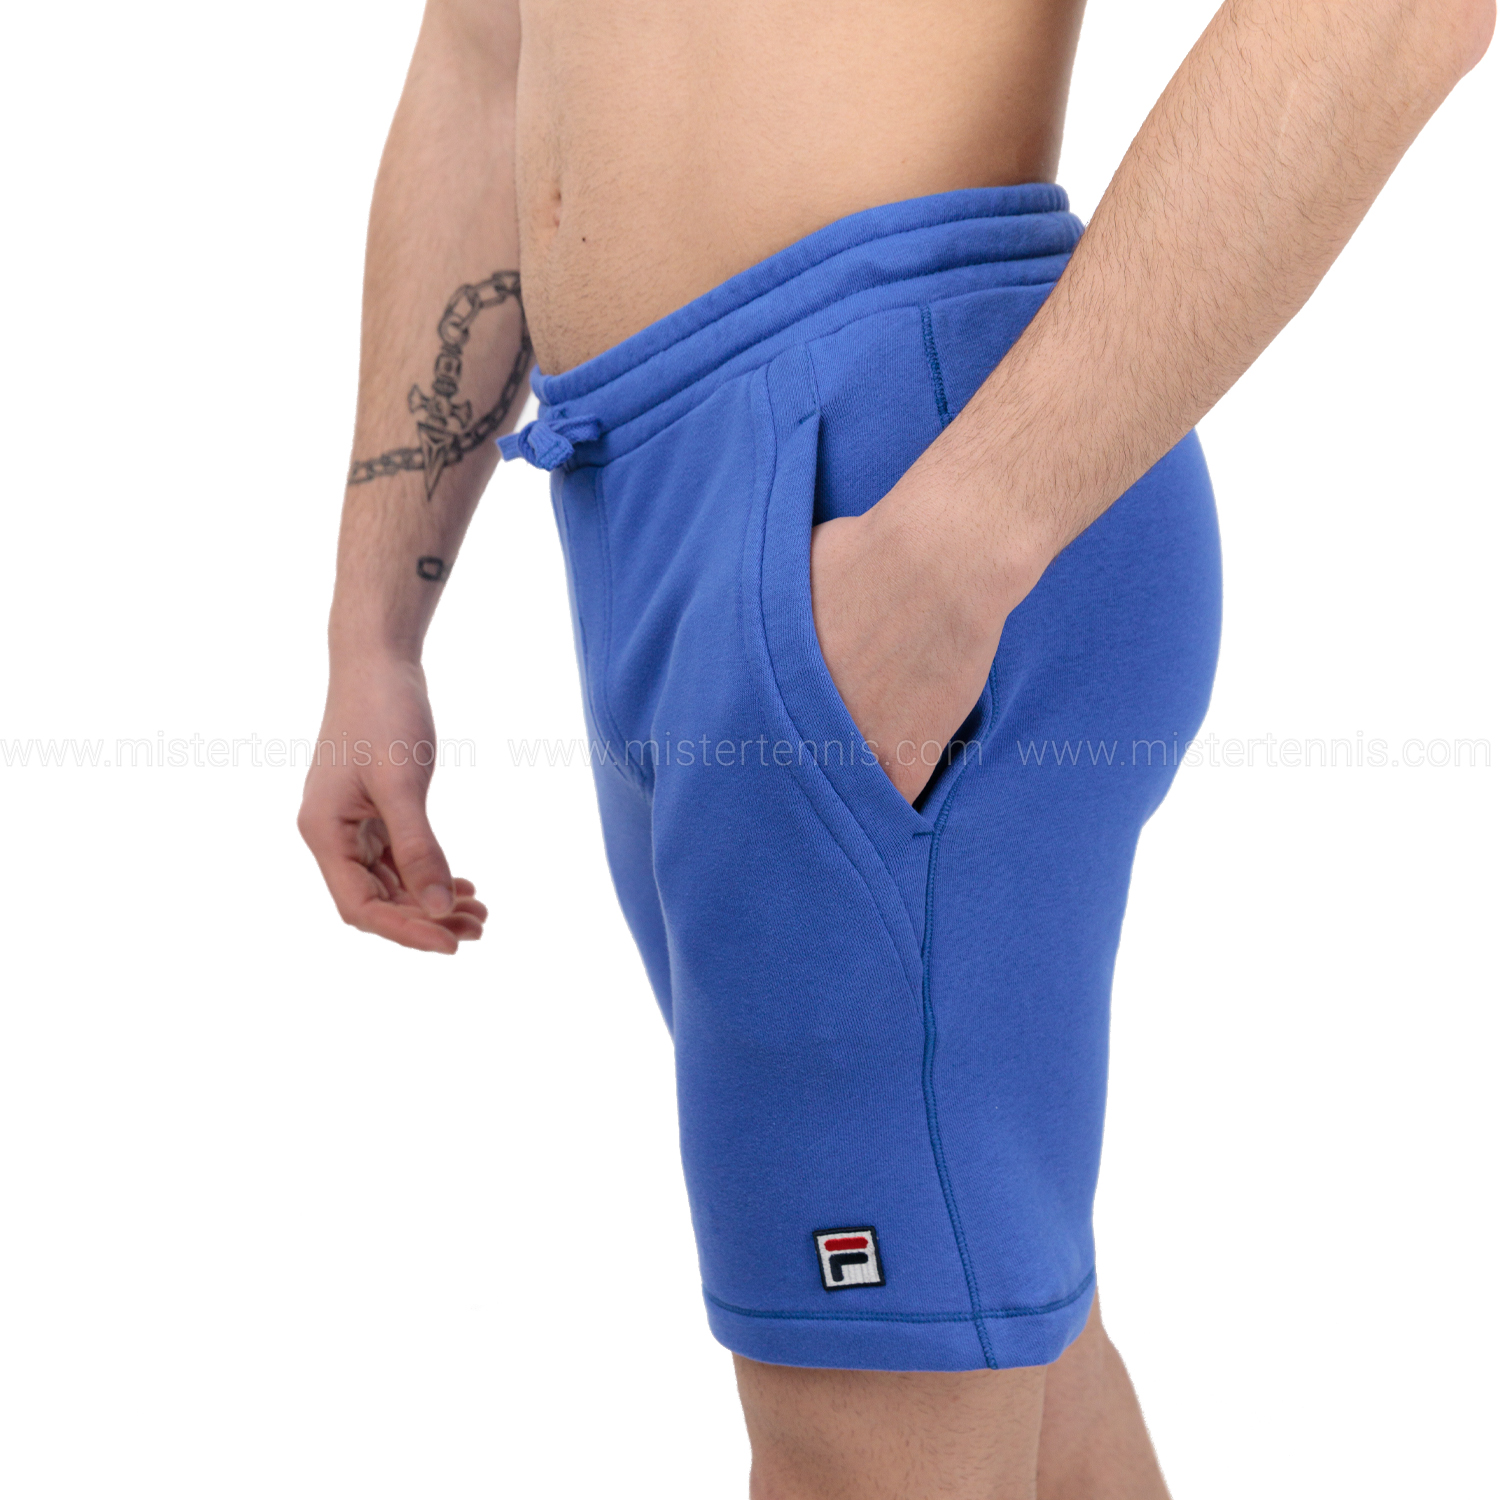 Fila Alfonso 9in Shorts - Dazzling Blue